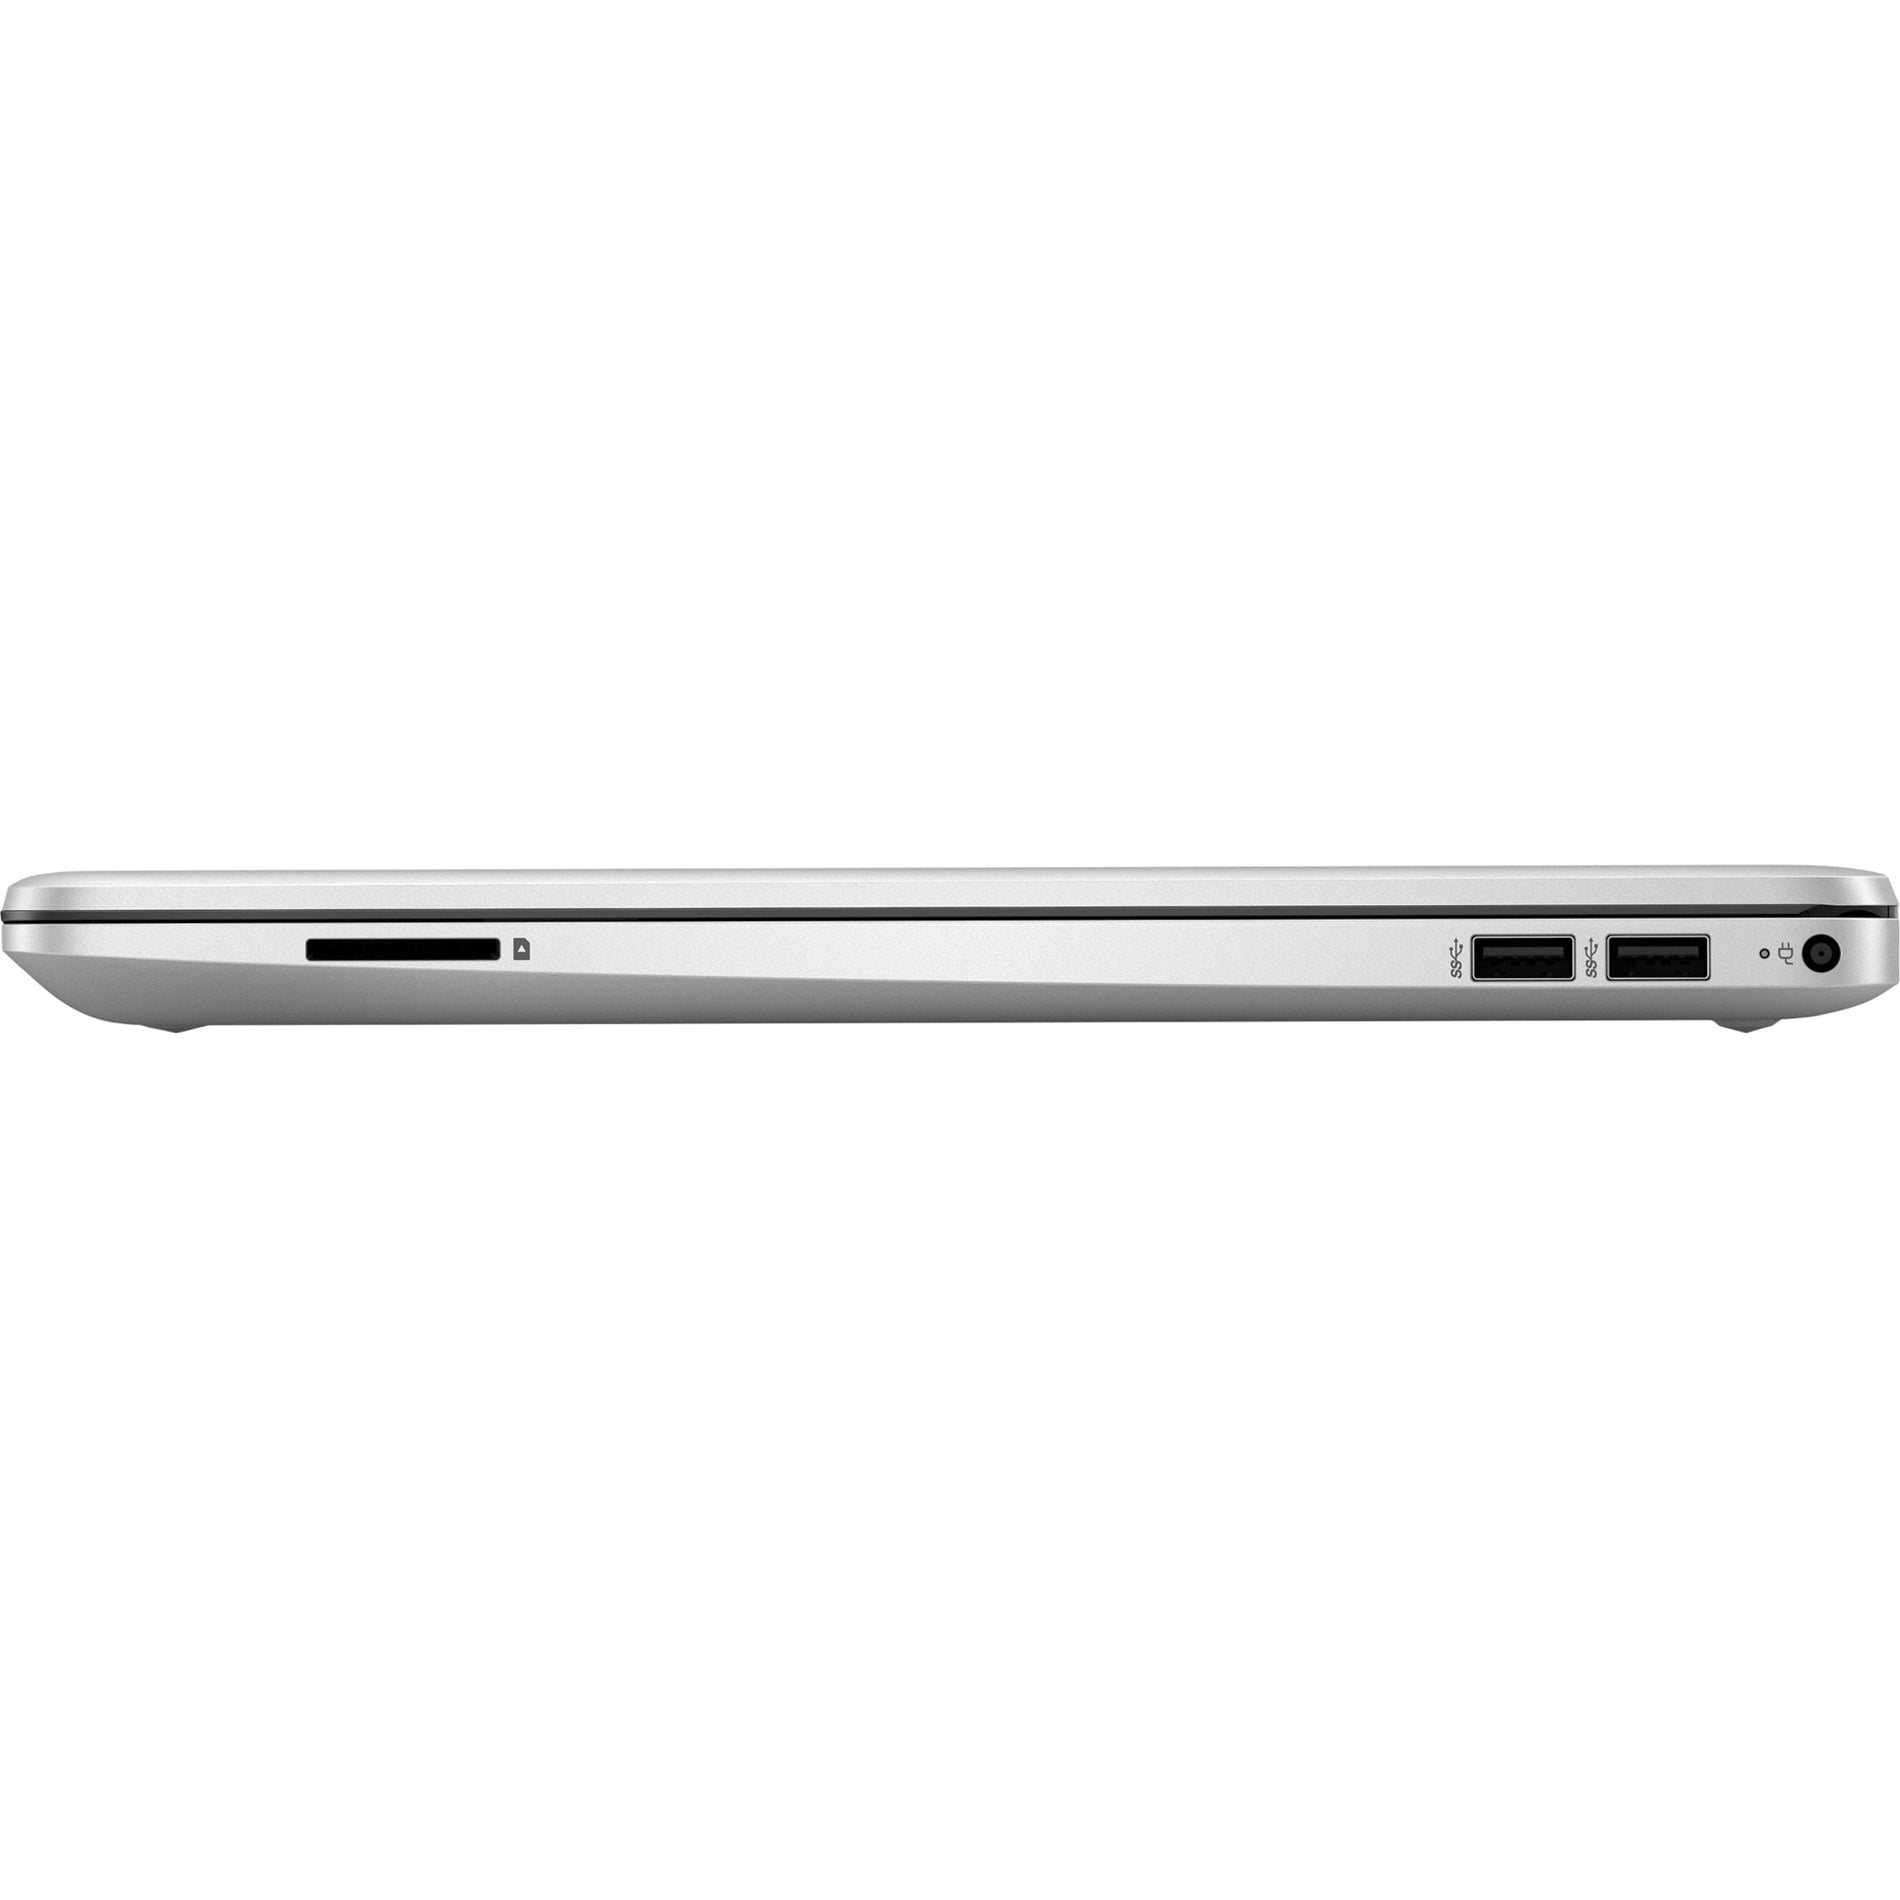 HPI SOURCING - NEW Chromebook 11MK G9 EE 11.6" Touchscreen Chromebook - HD - Octa-core (ARM Cortex A73 + Cortex A53) - 4 GB - 32 GB Flash Memory (436B8UT#ABA)